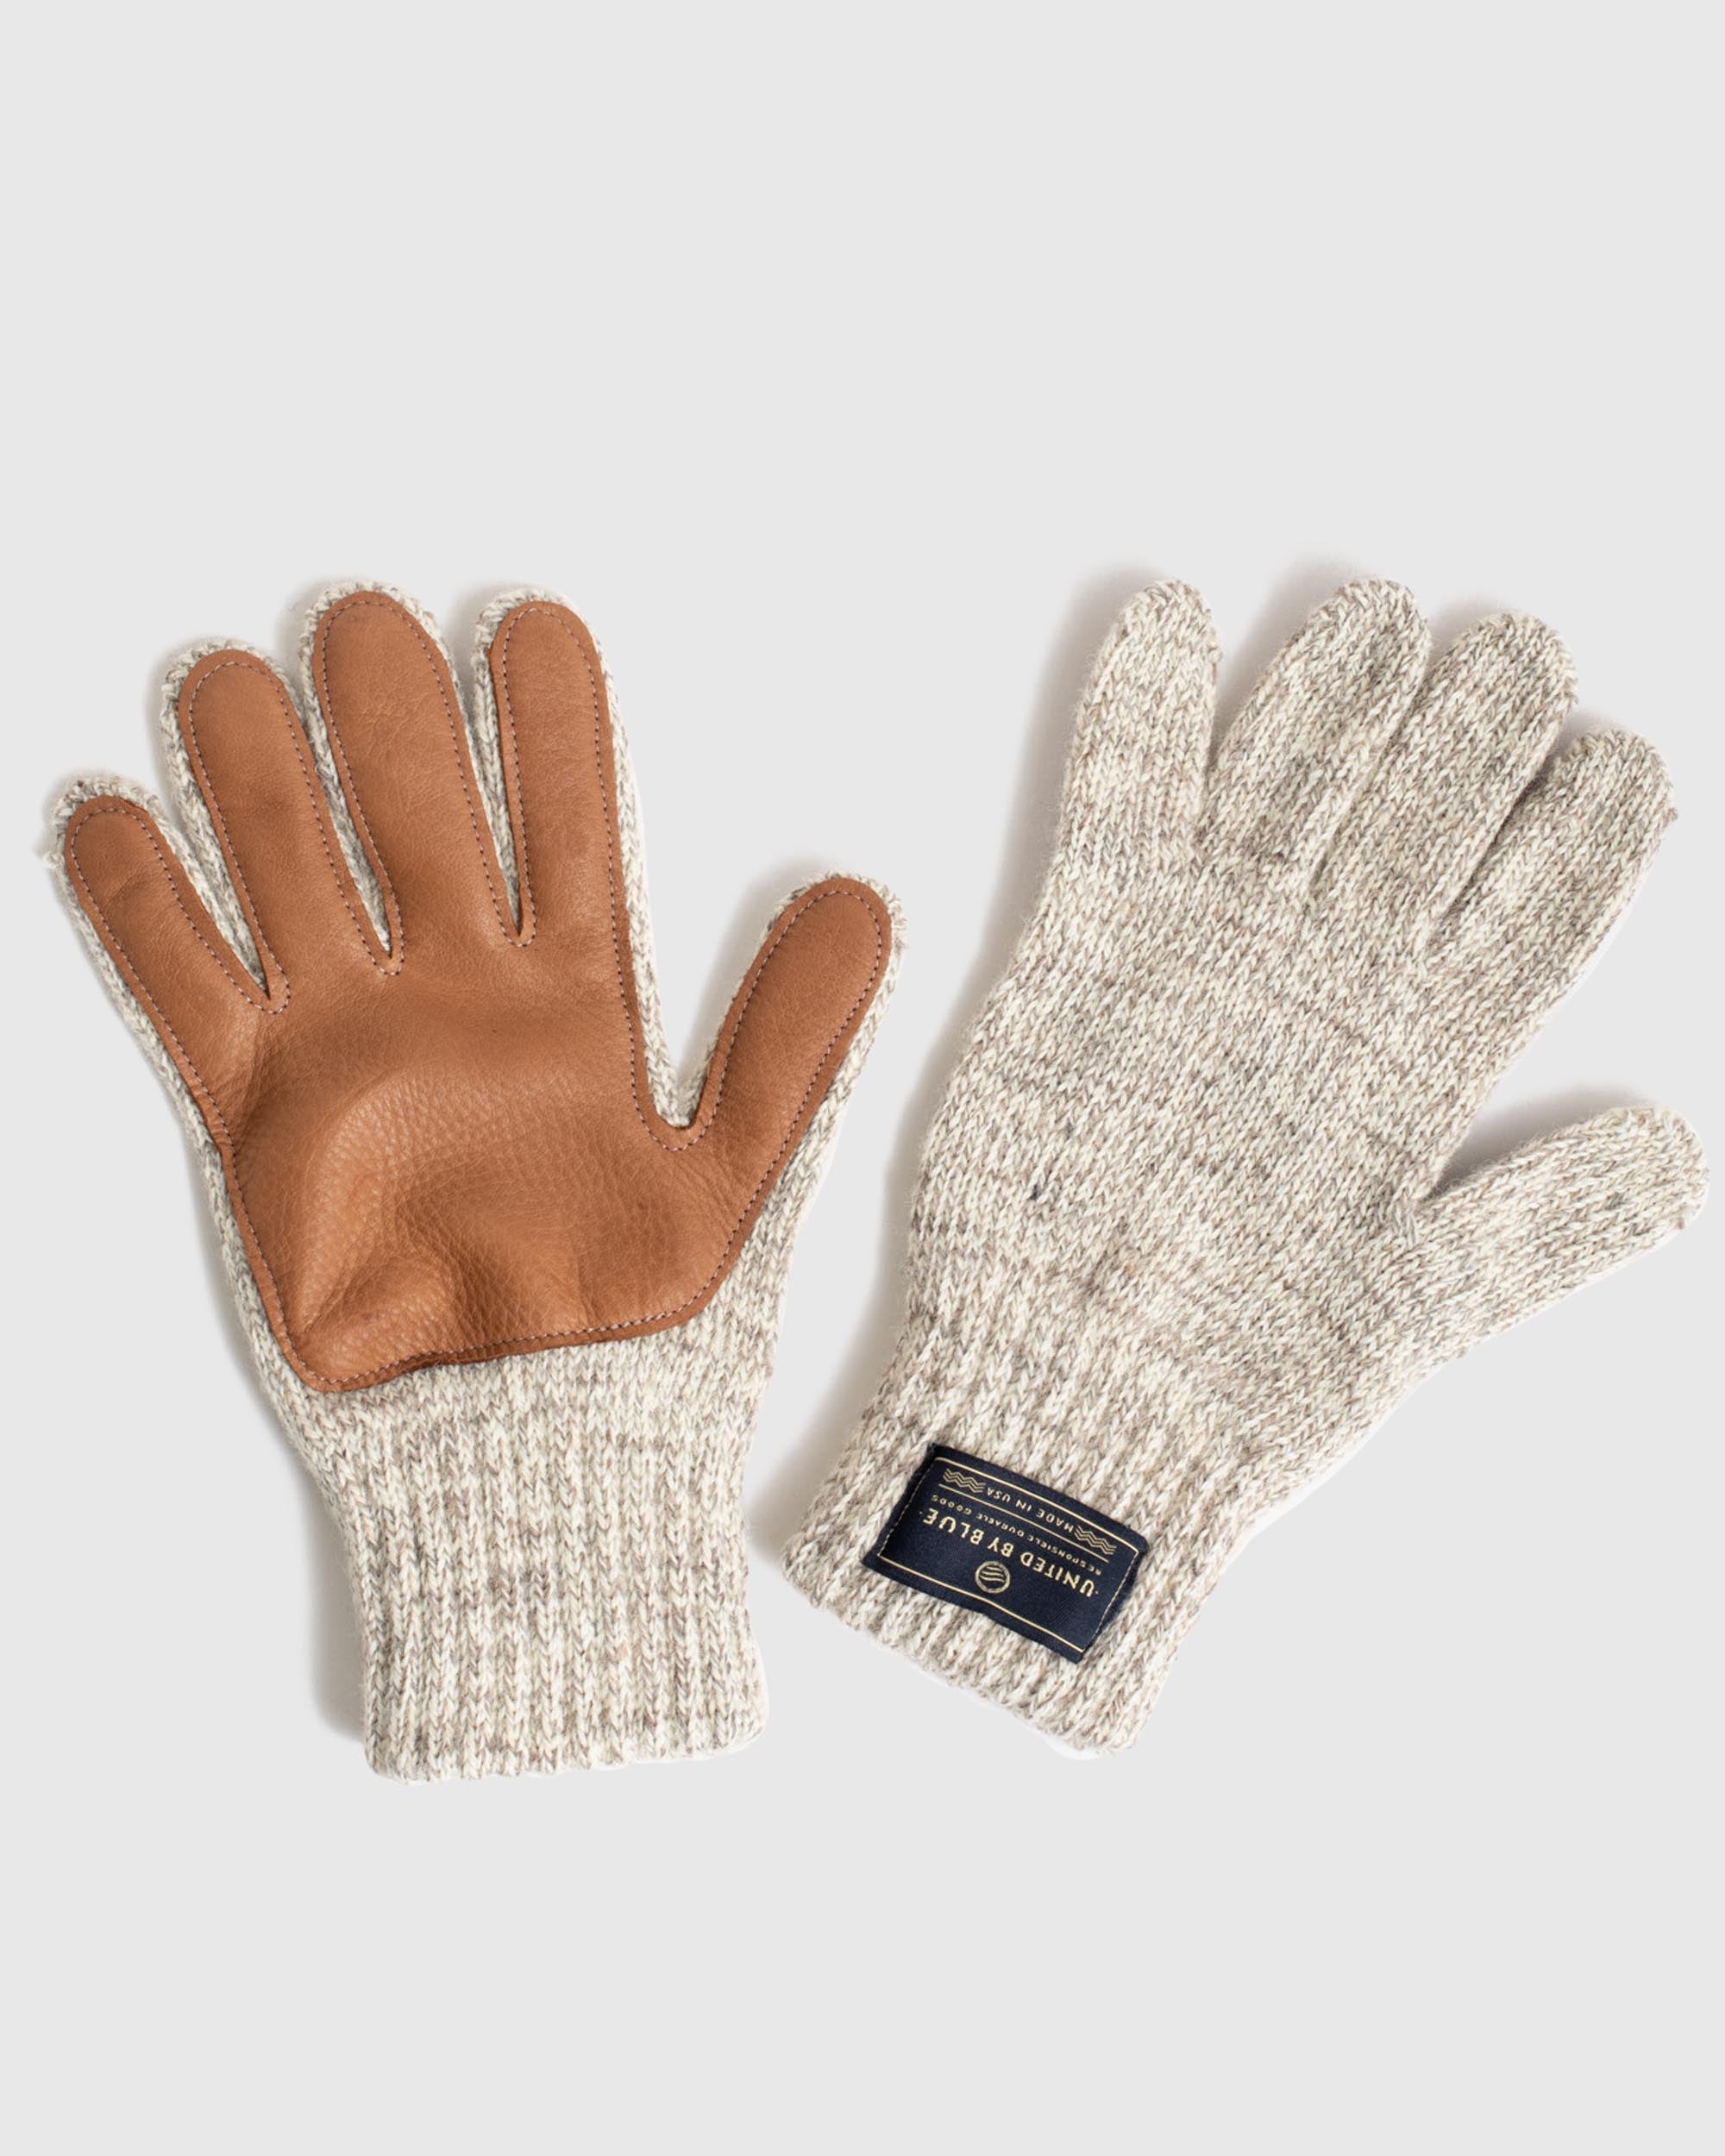 Deerskin Leather Palm Gloves